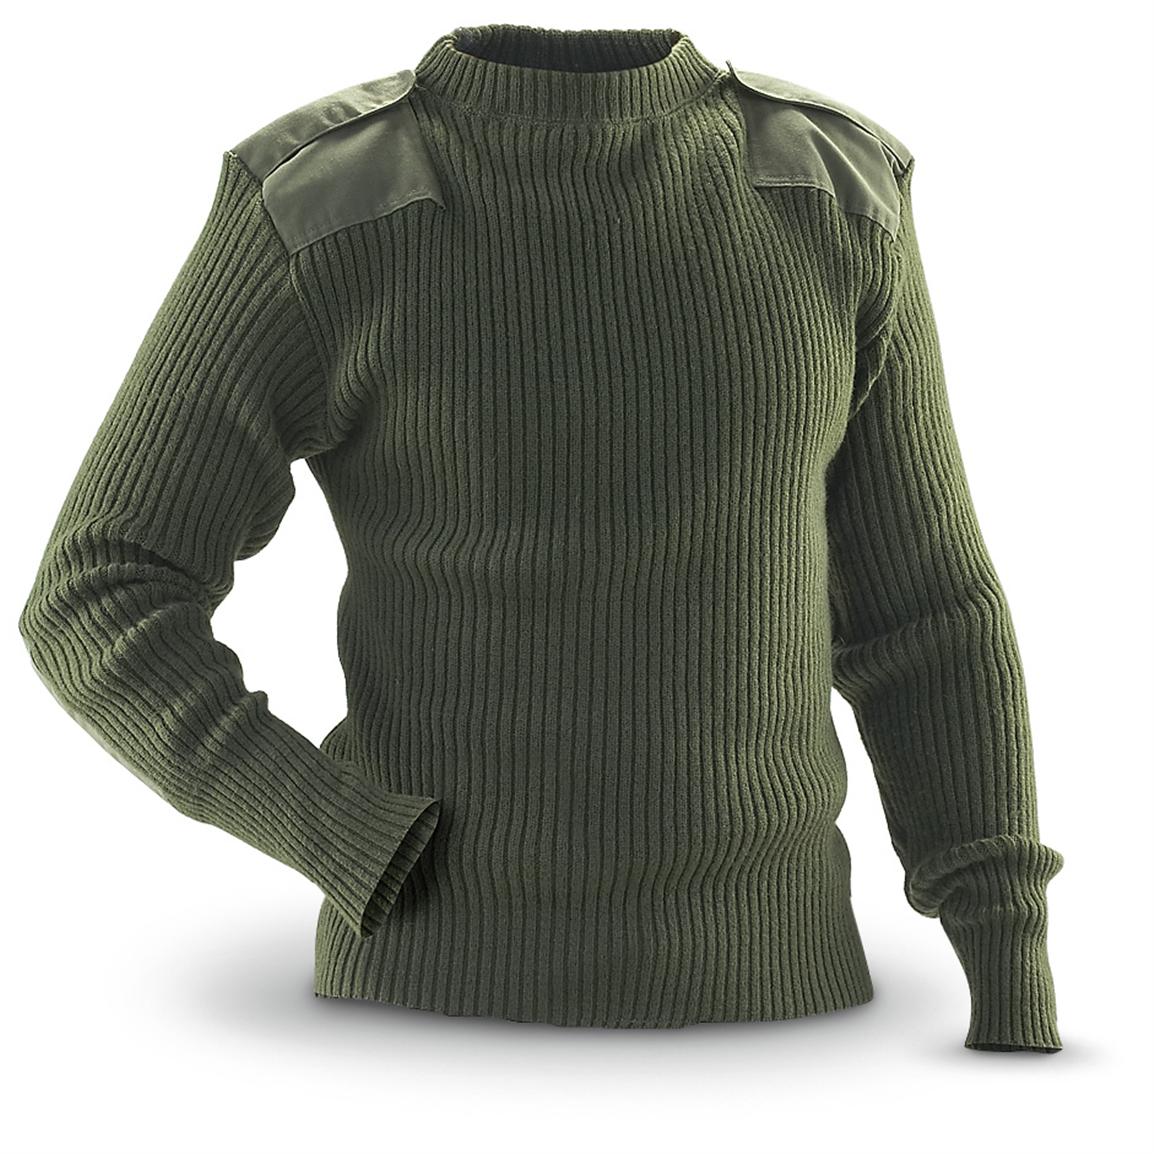 New United States Marine Corps Military Commando Sweater, Olive Drab ...